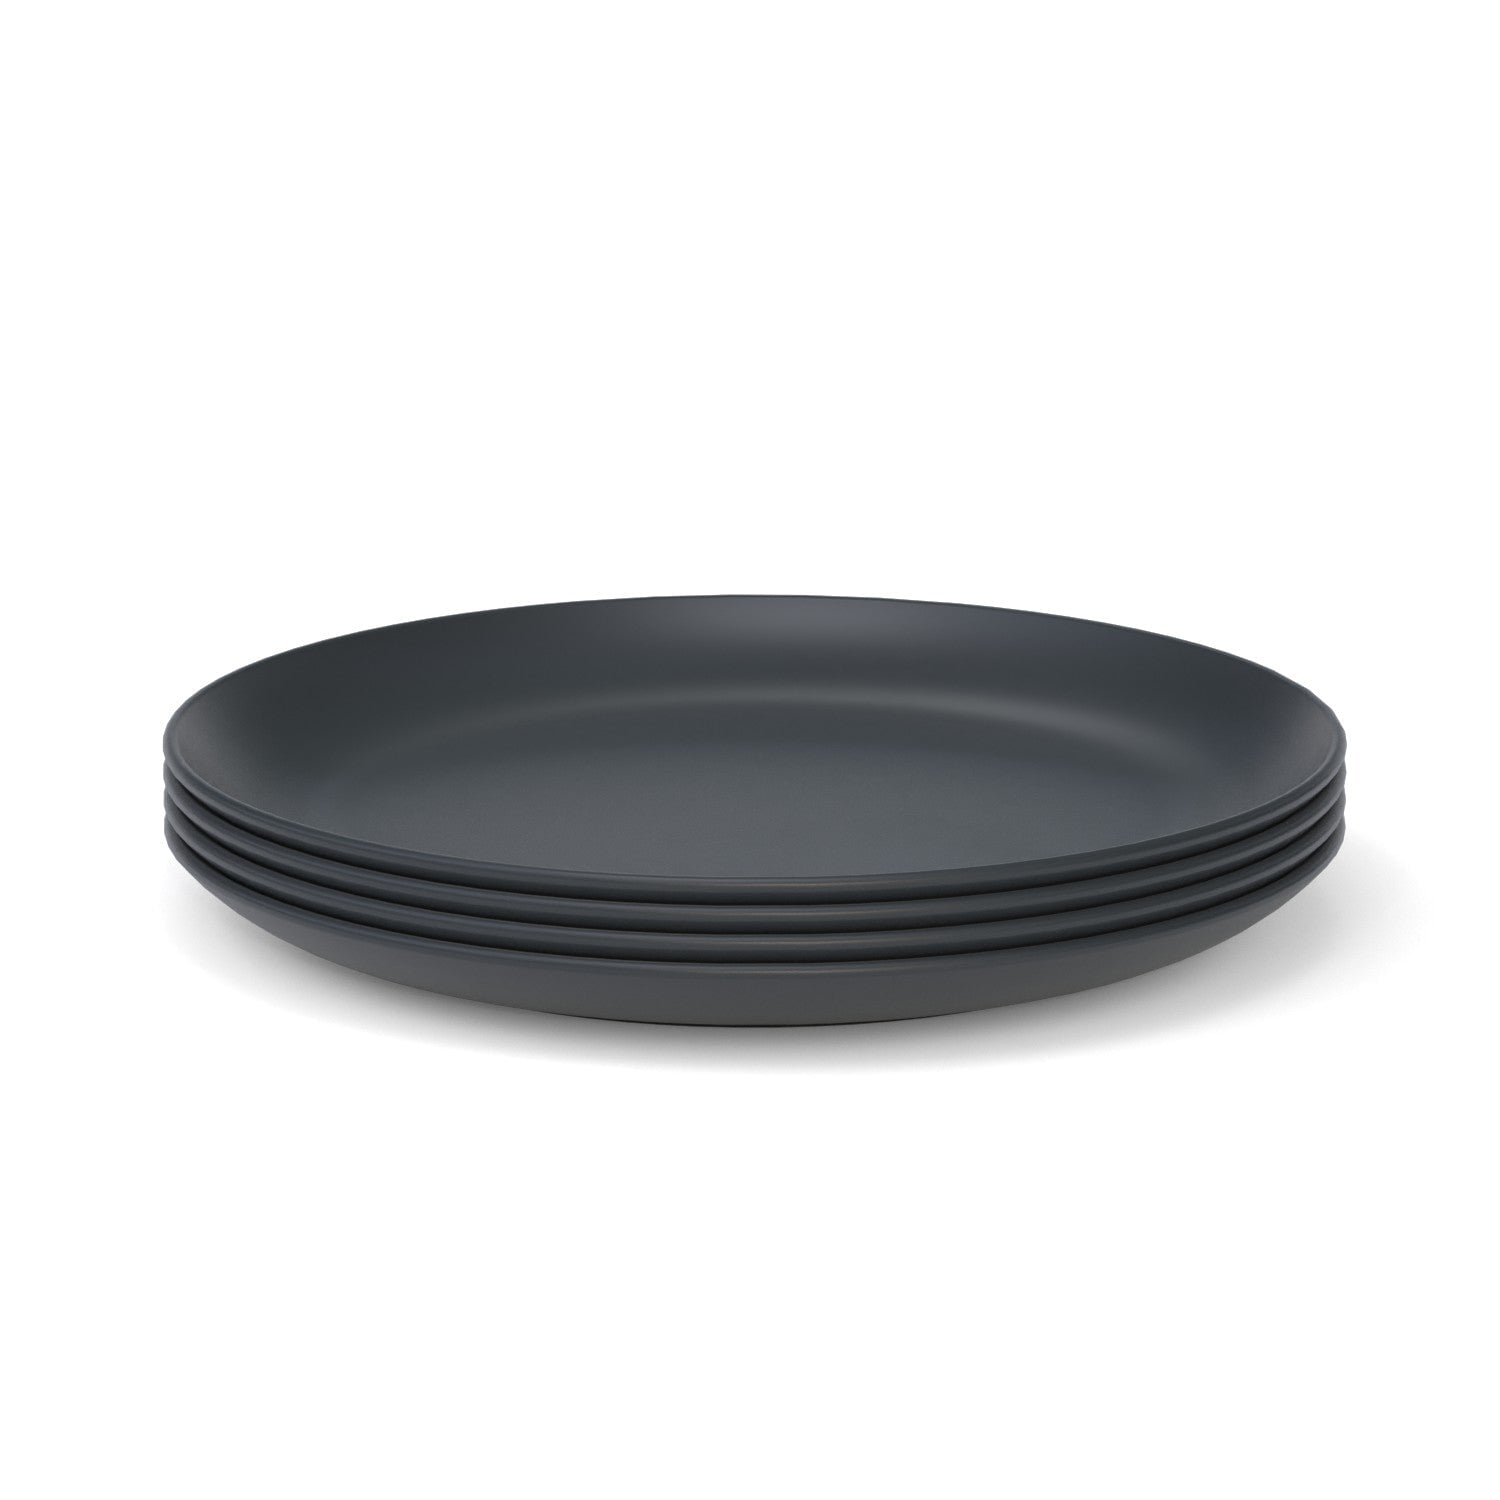 11" Round Dinner Plate Set of 4 - Black